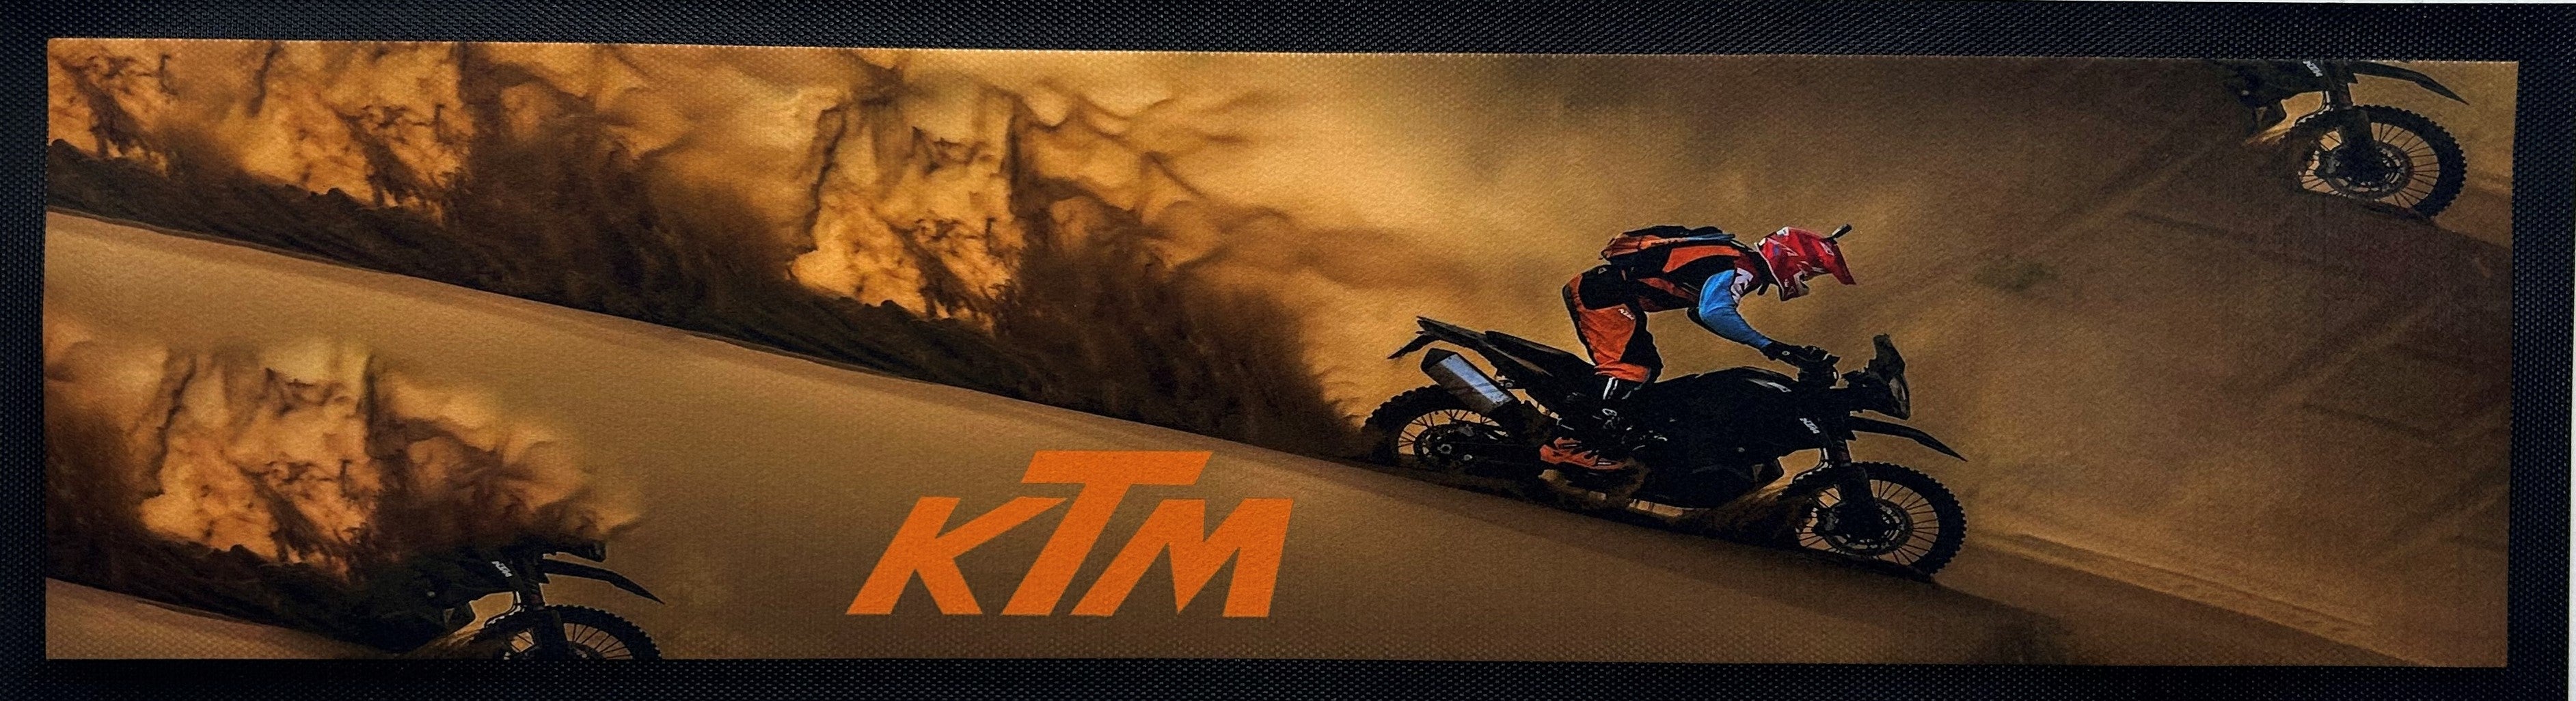 KTM Motorcycles Bar Premium Rubber-Backed Bar Mat Runner - KING CAVE